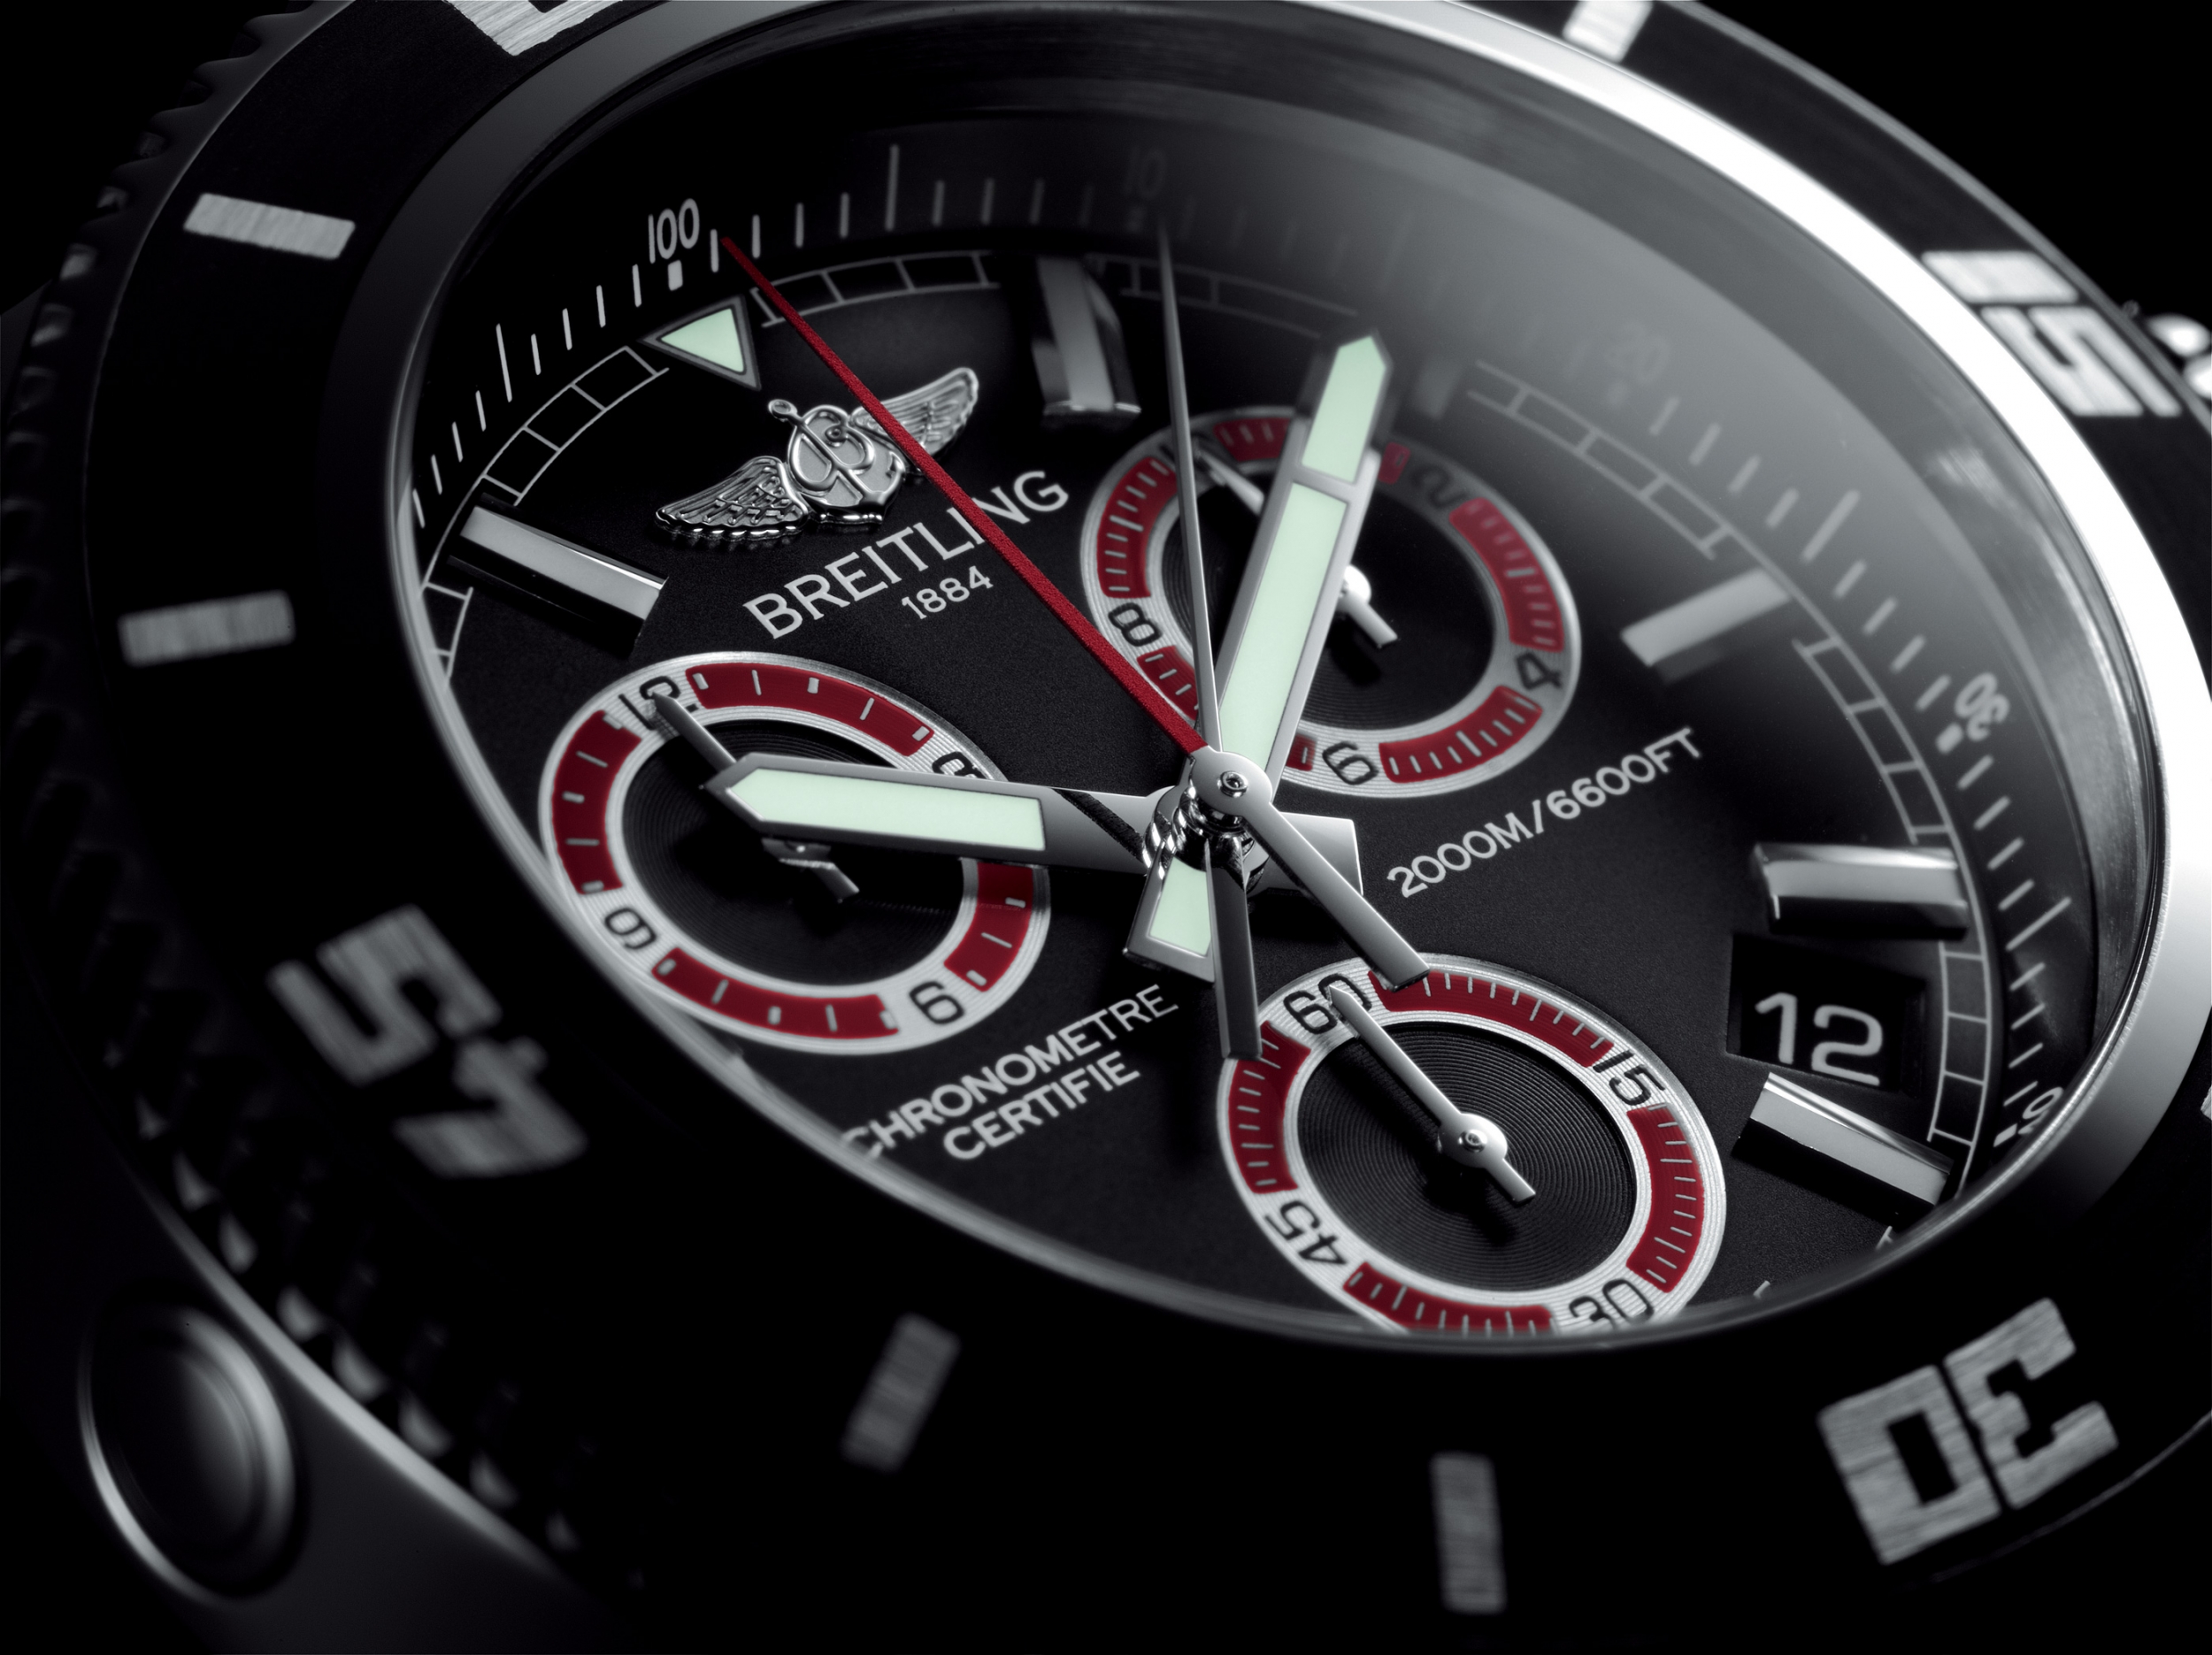 Rolex Swiss Replica Watches USA